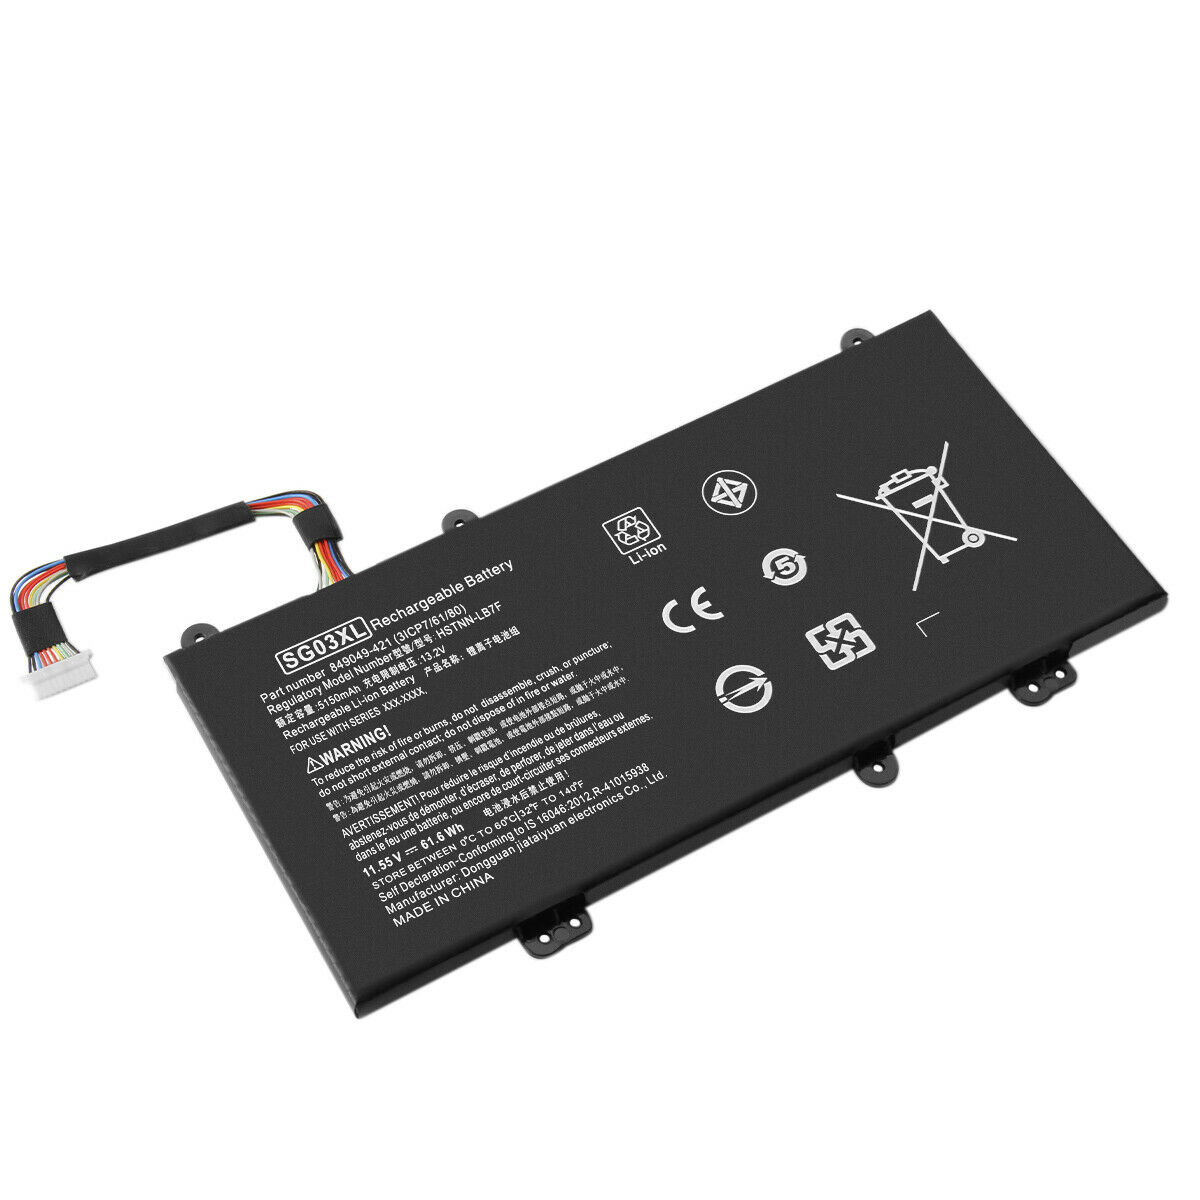 SG03XL HP ENVY 17-U011NR M7-U109DX 17-u163cl 17-u175nr 17-u153nr compatible battery